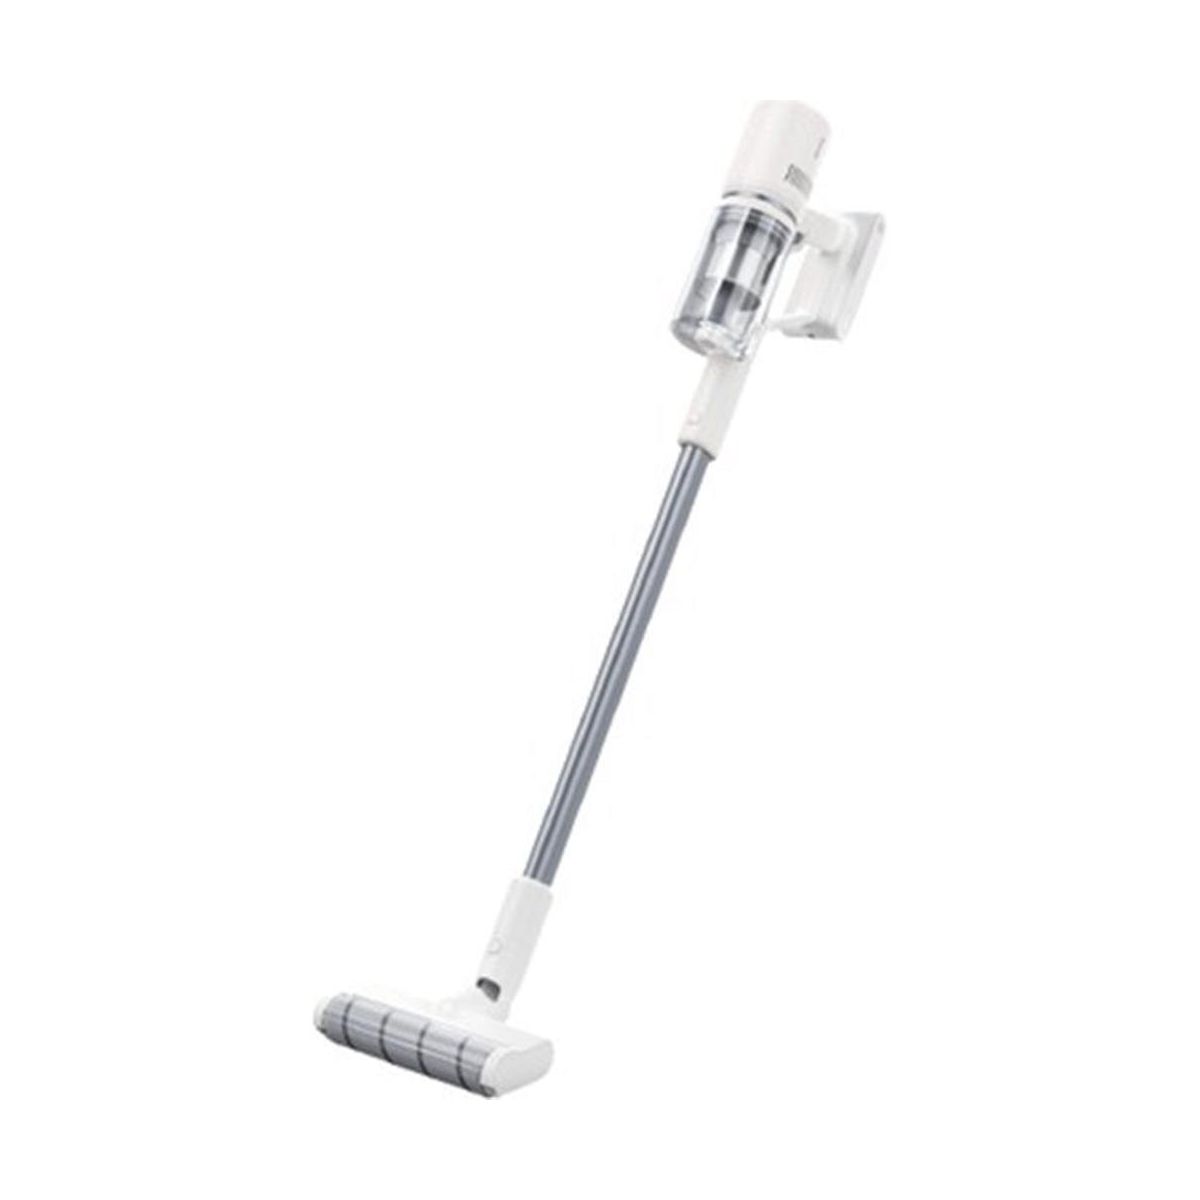 Xiaomi Vacuum Cleaner G11 Eu Dikey Şarjlı Süpürge Fiyatı